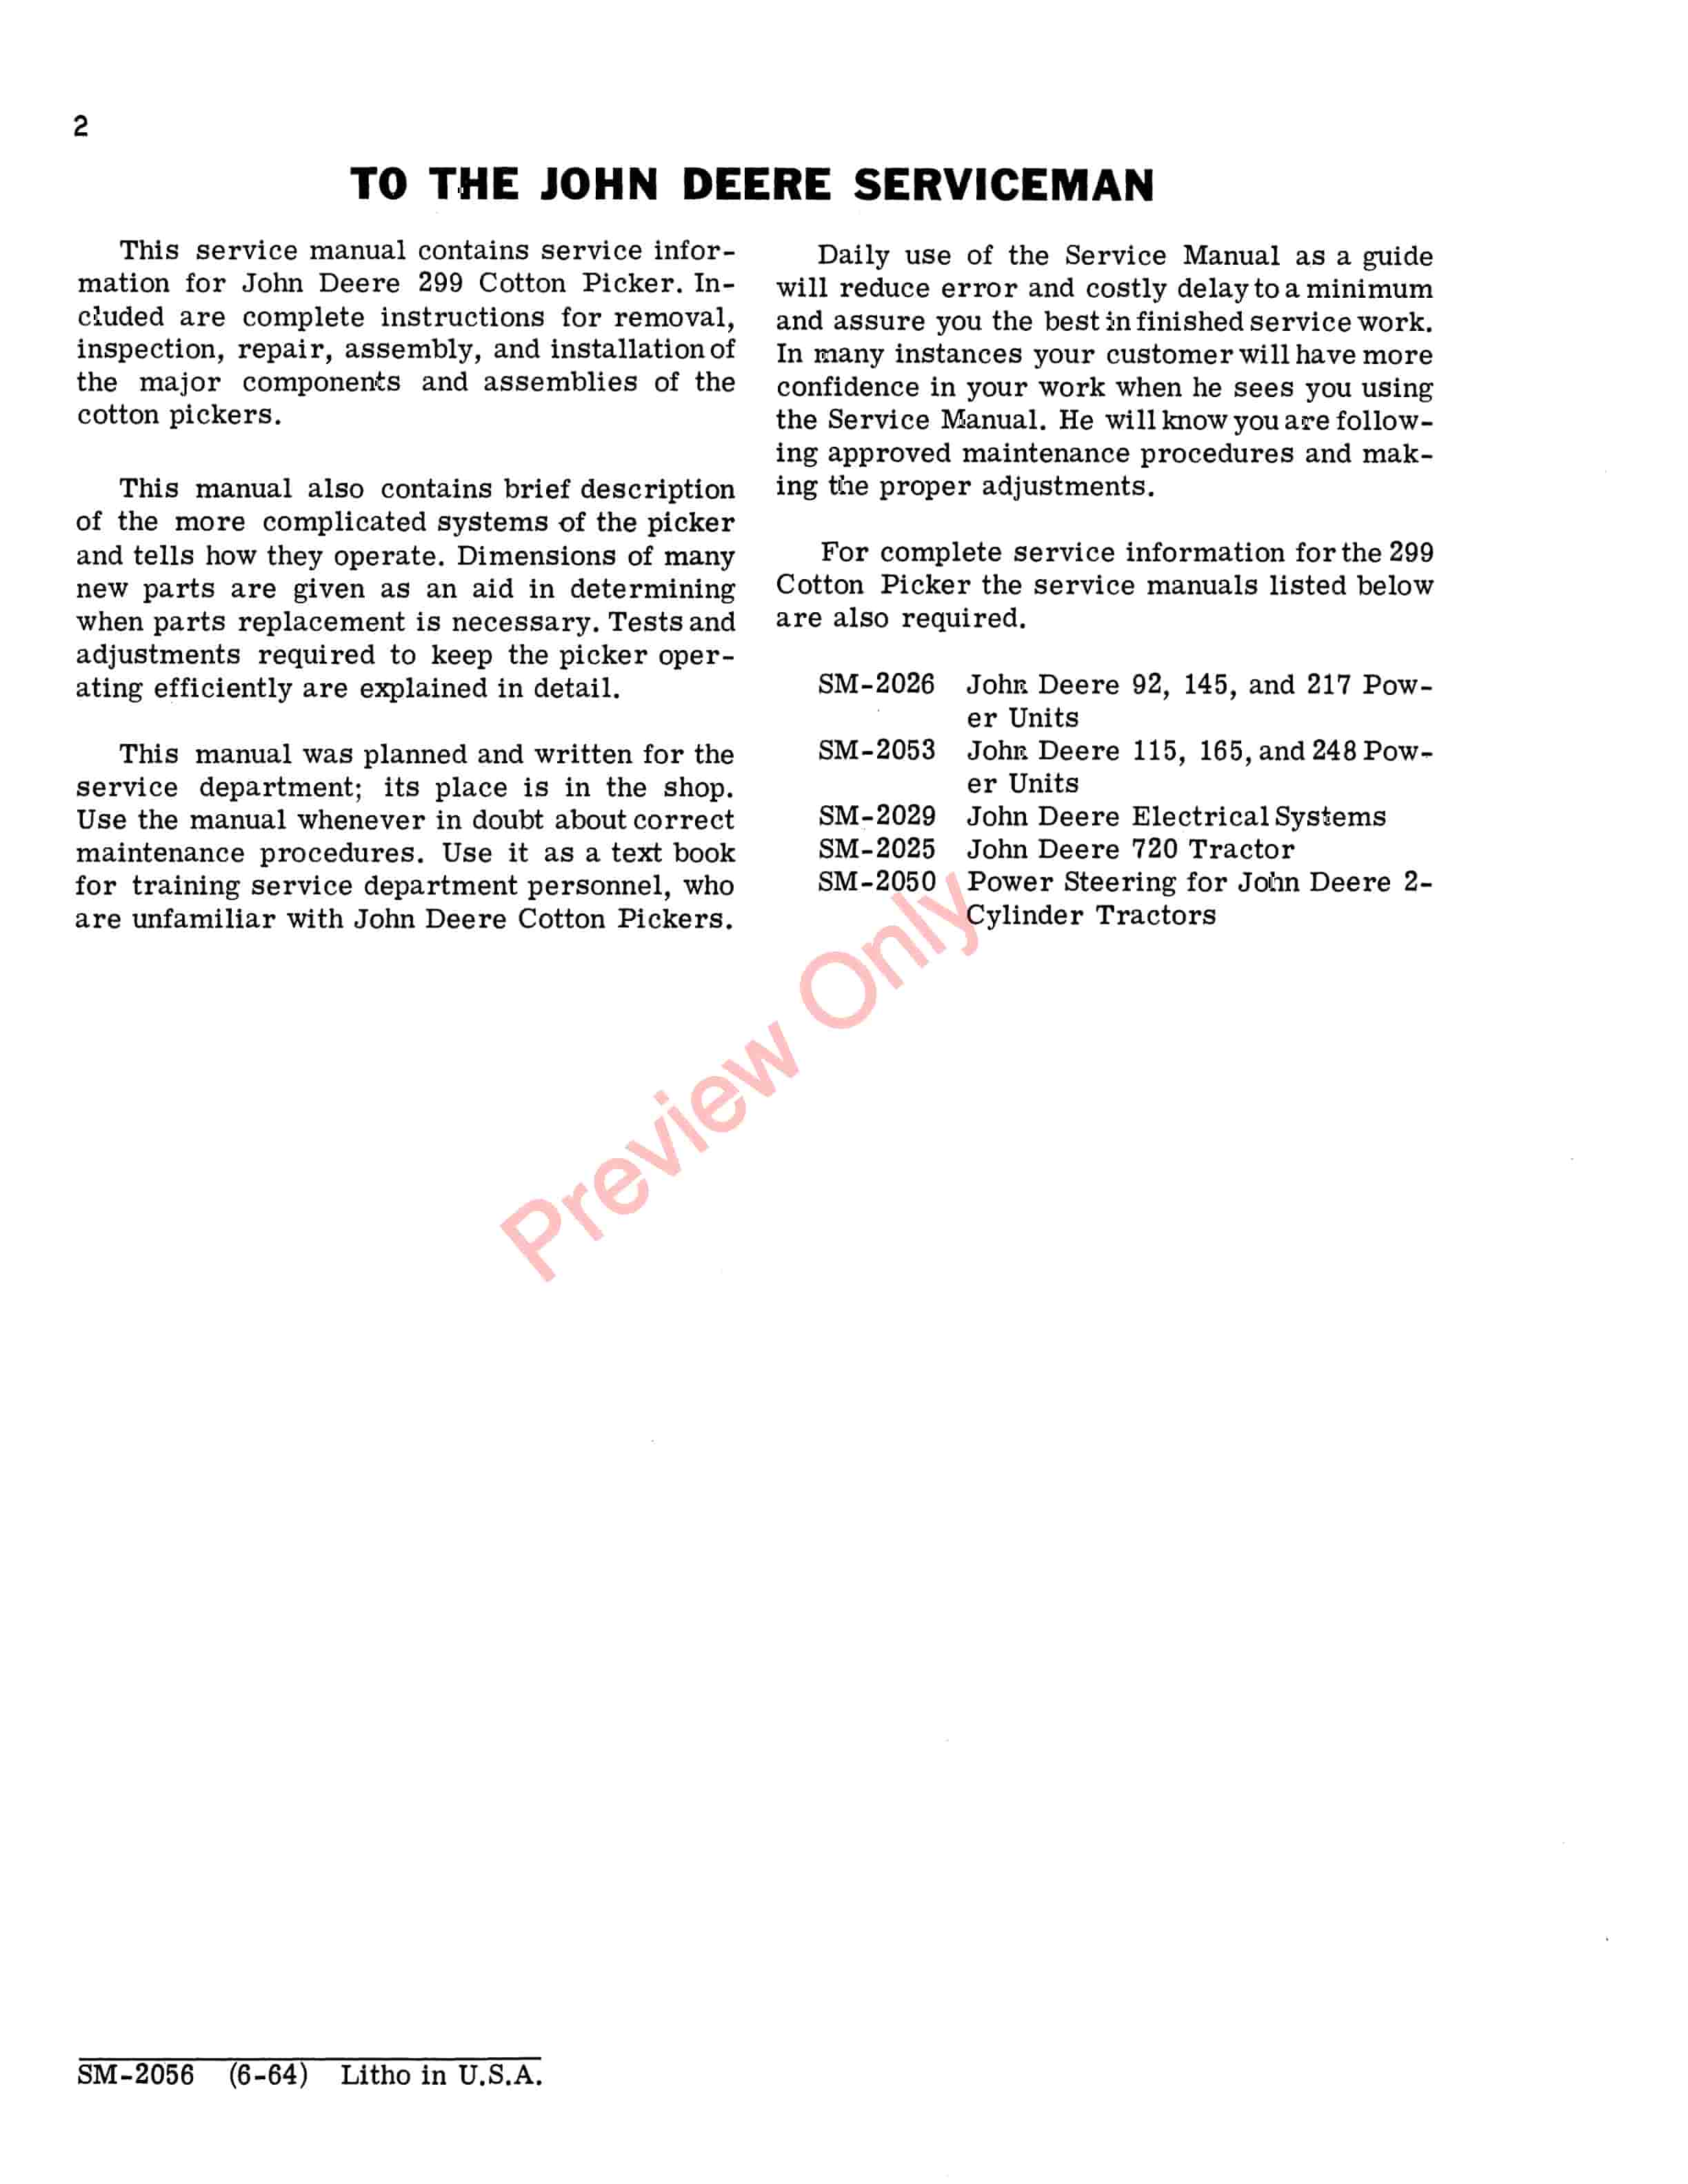 John Deere 299 Cotton Picker Service Manual SM2056 01APR66 4